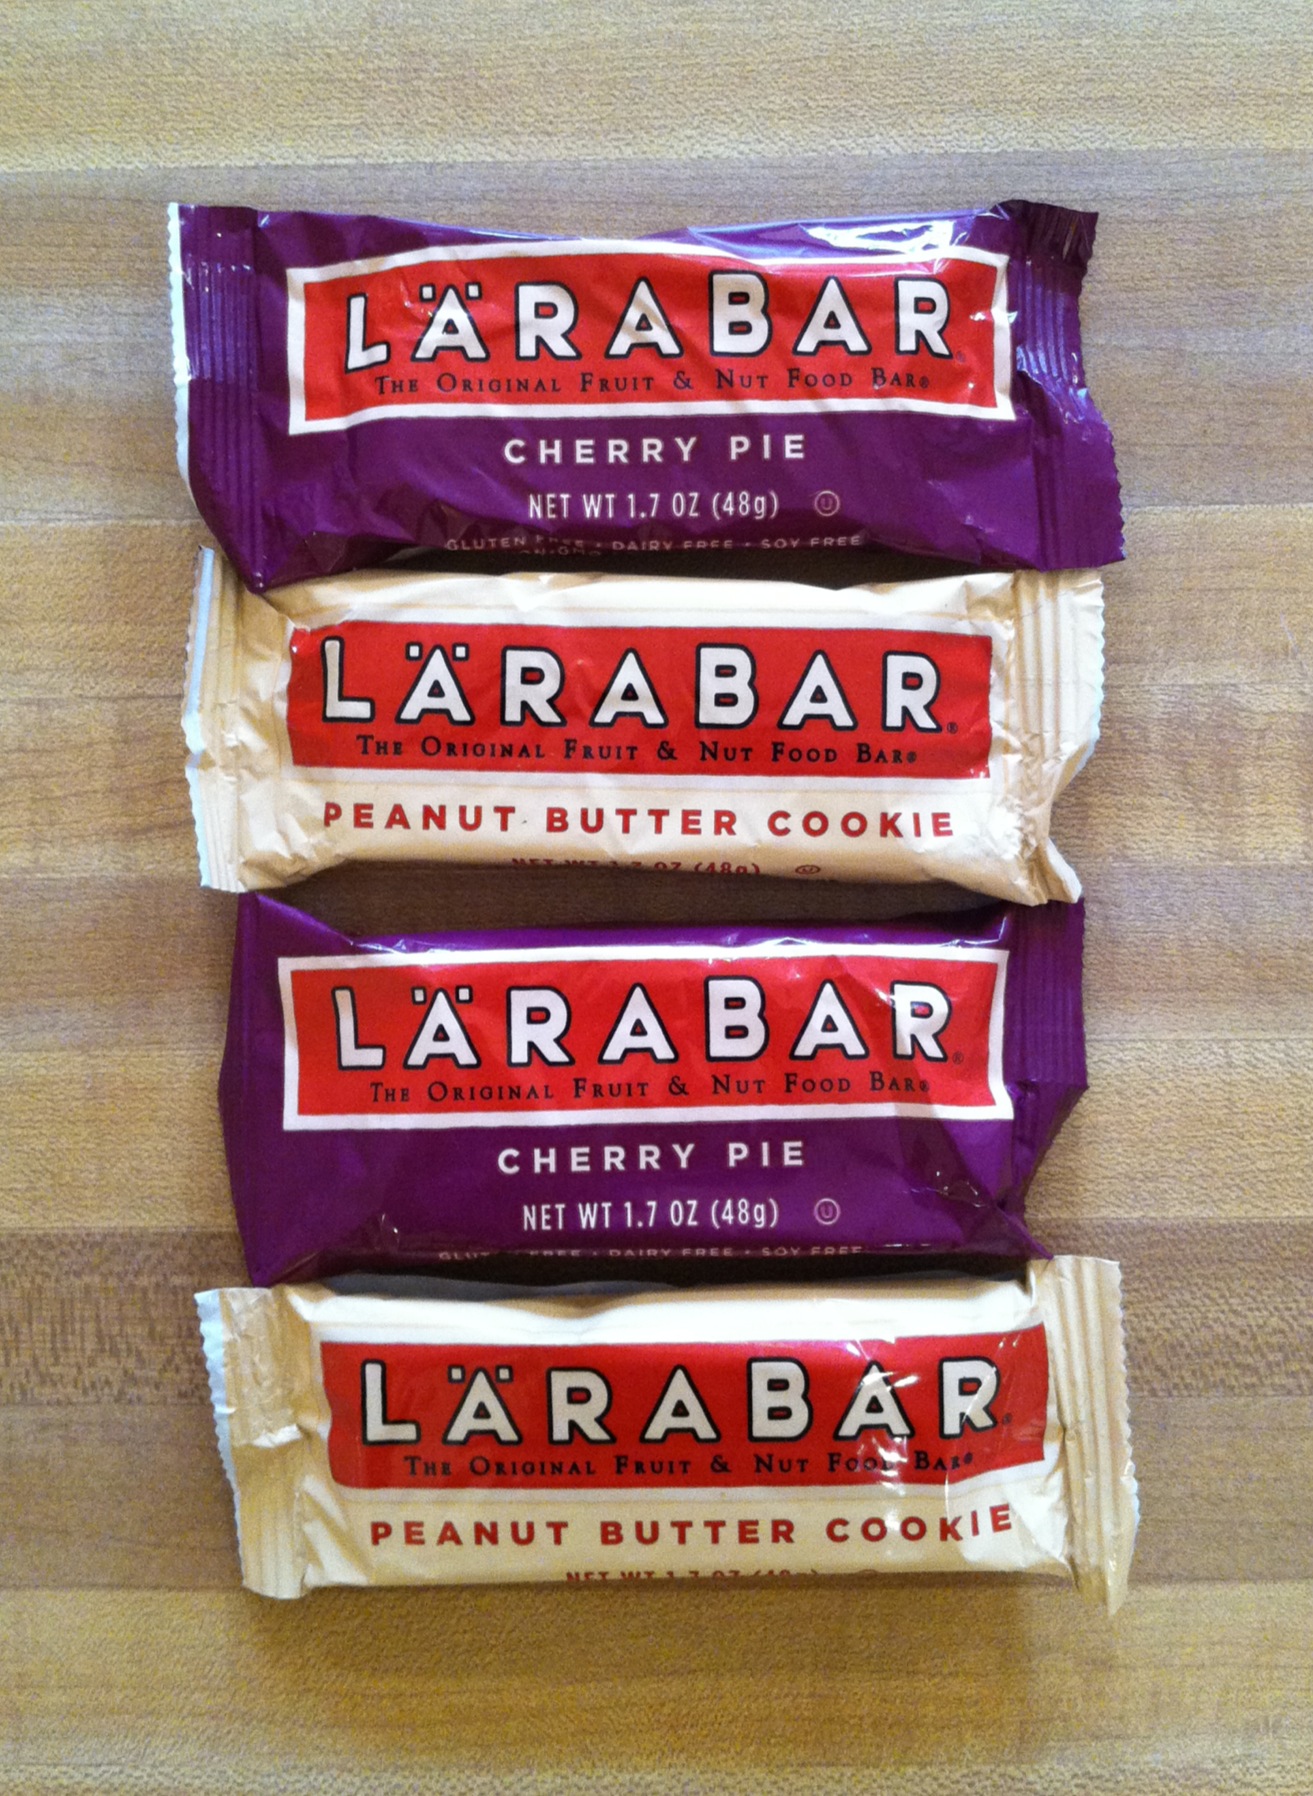 Want FREE LaraBars?